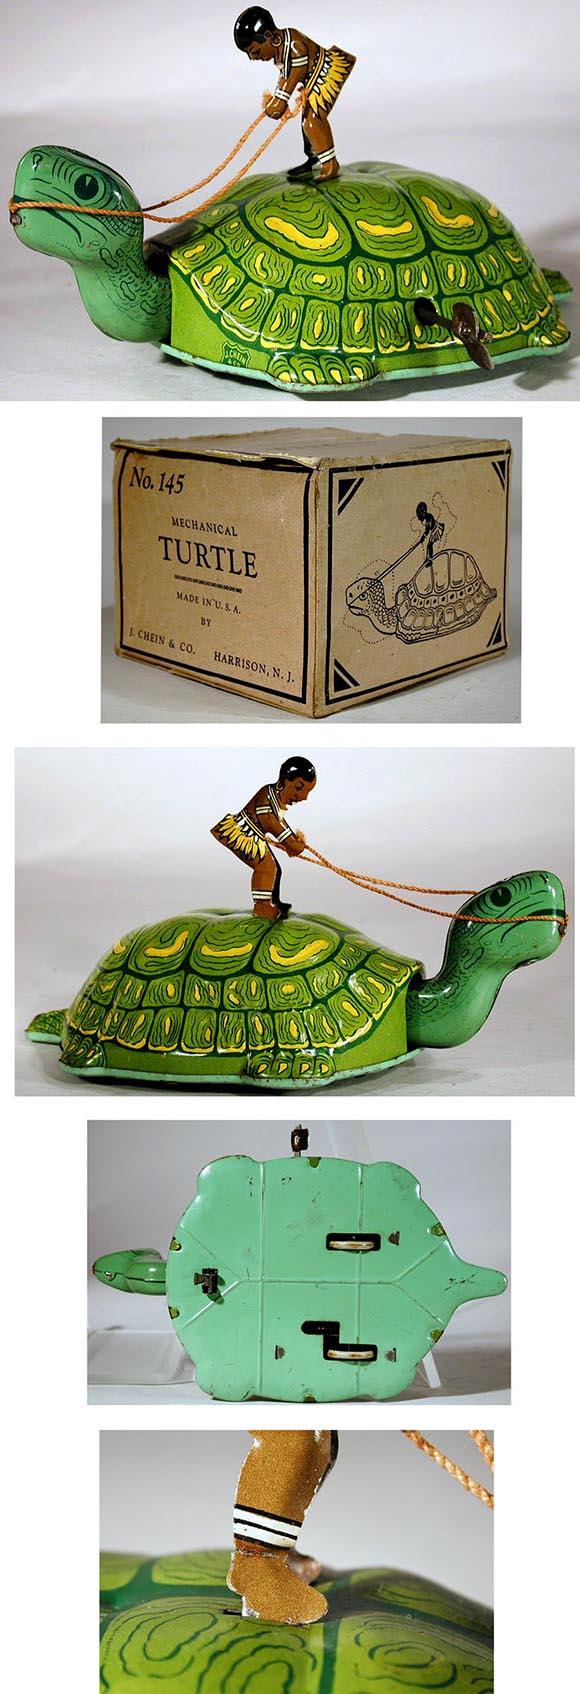 c.1939 Chein, No.145 Mechanical Turtle (Green) in Original Box